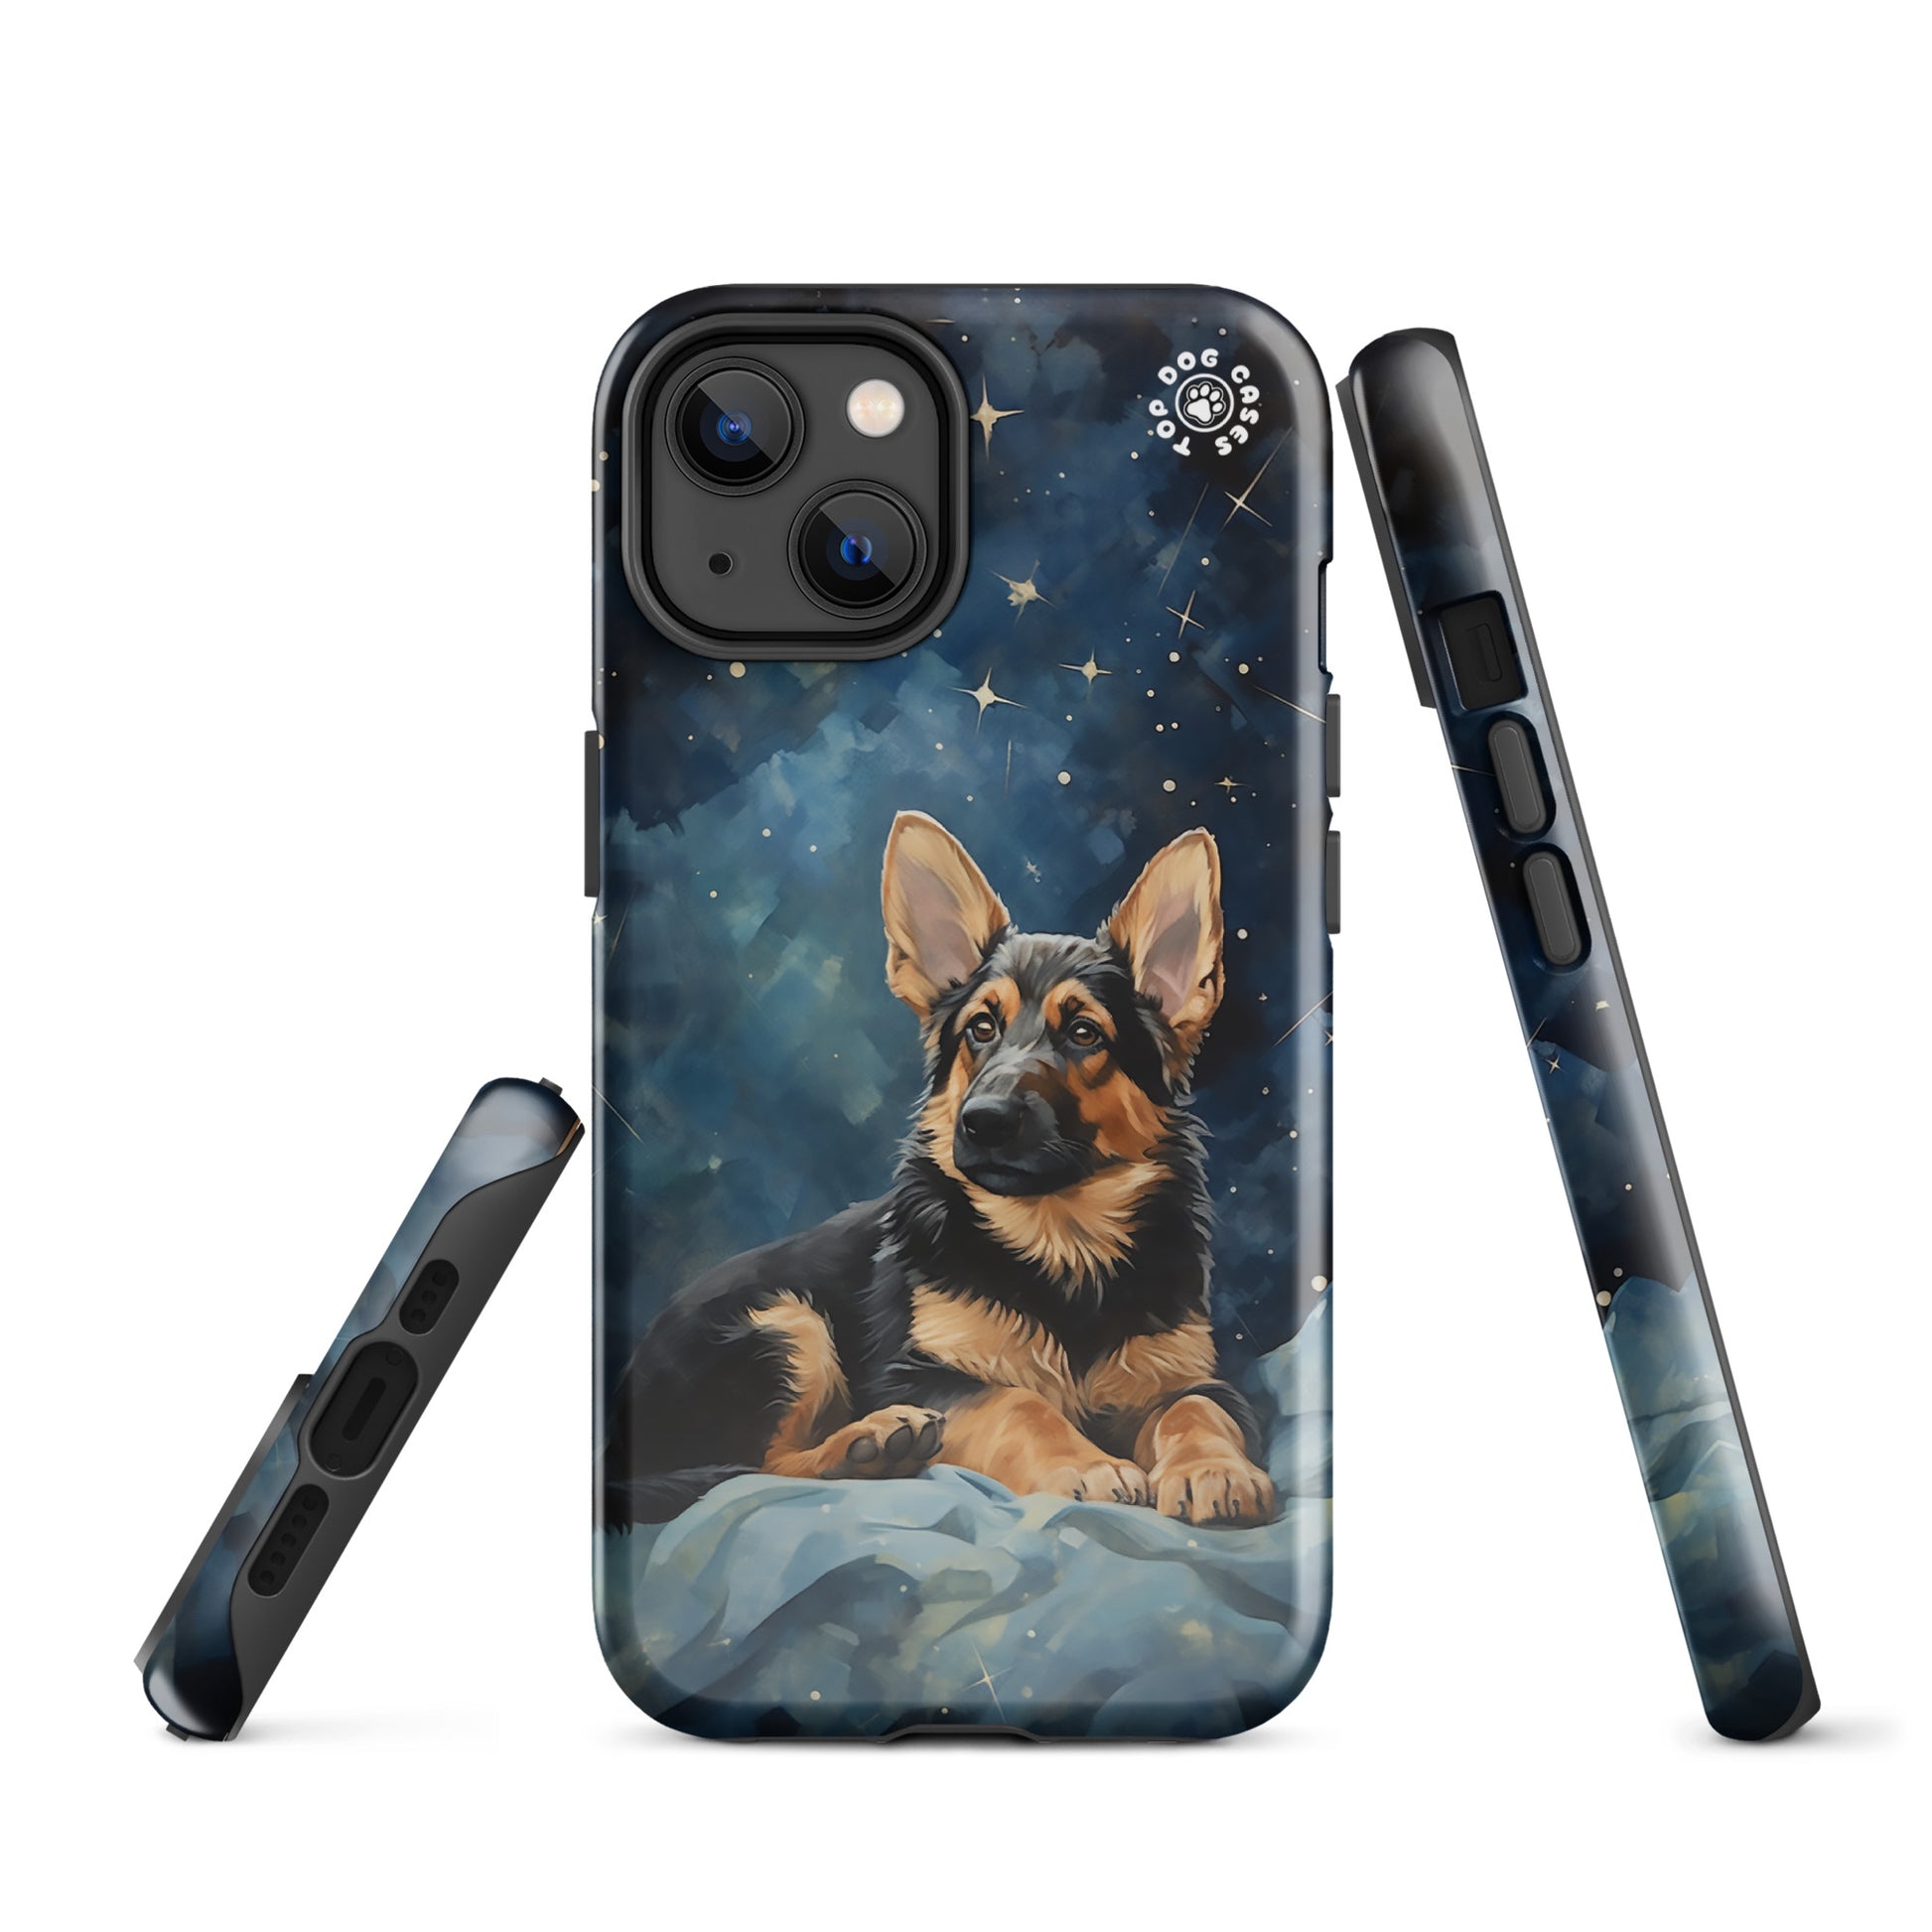 German Shepherd - iPhone 14 Case - Top Dog Cases - #CuteDog, #CuteDogs, #German Shepherd, #GermanShepherdCase, #iPhone, #iPhone14, #iPhone14case, #iPhone14DogCase, #iPhone14Plus, #iPhone14Pluscase, #iPhone14Pro, #iPhone14ProMax, #iPhone14ProMaxCase